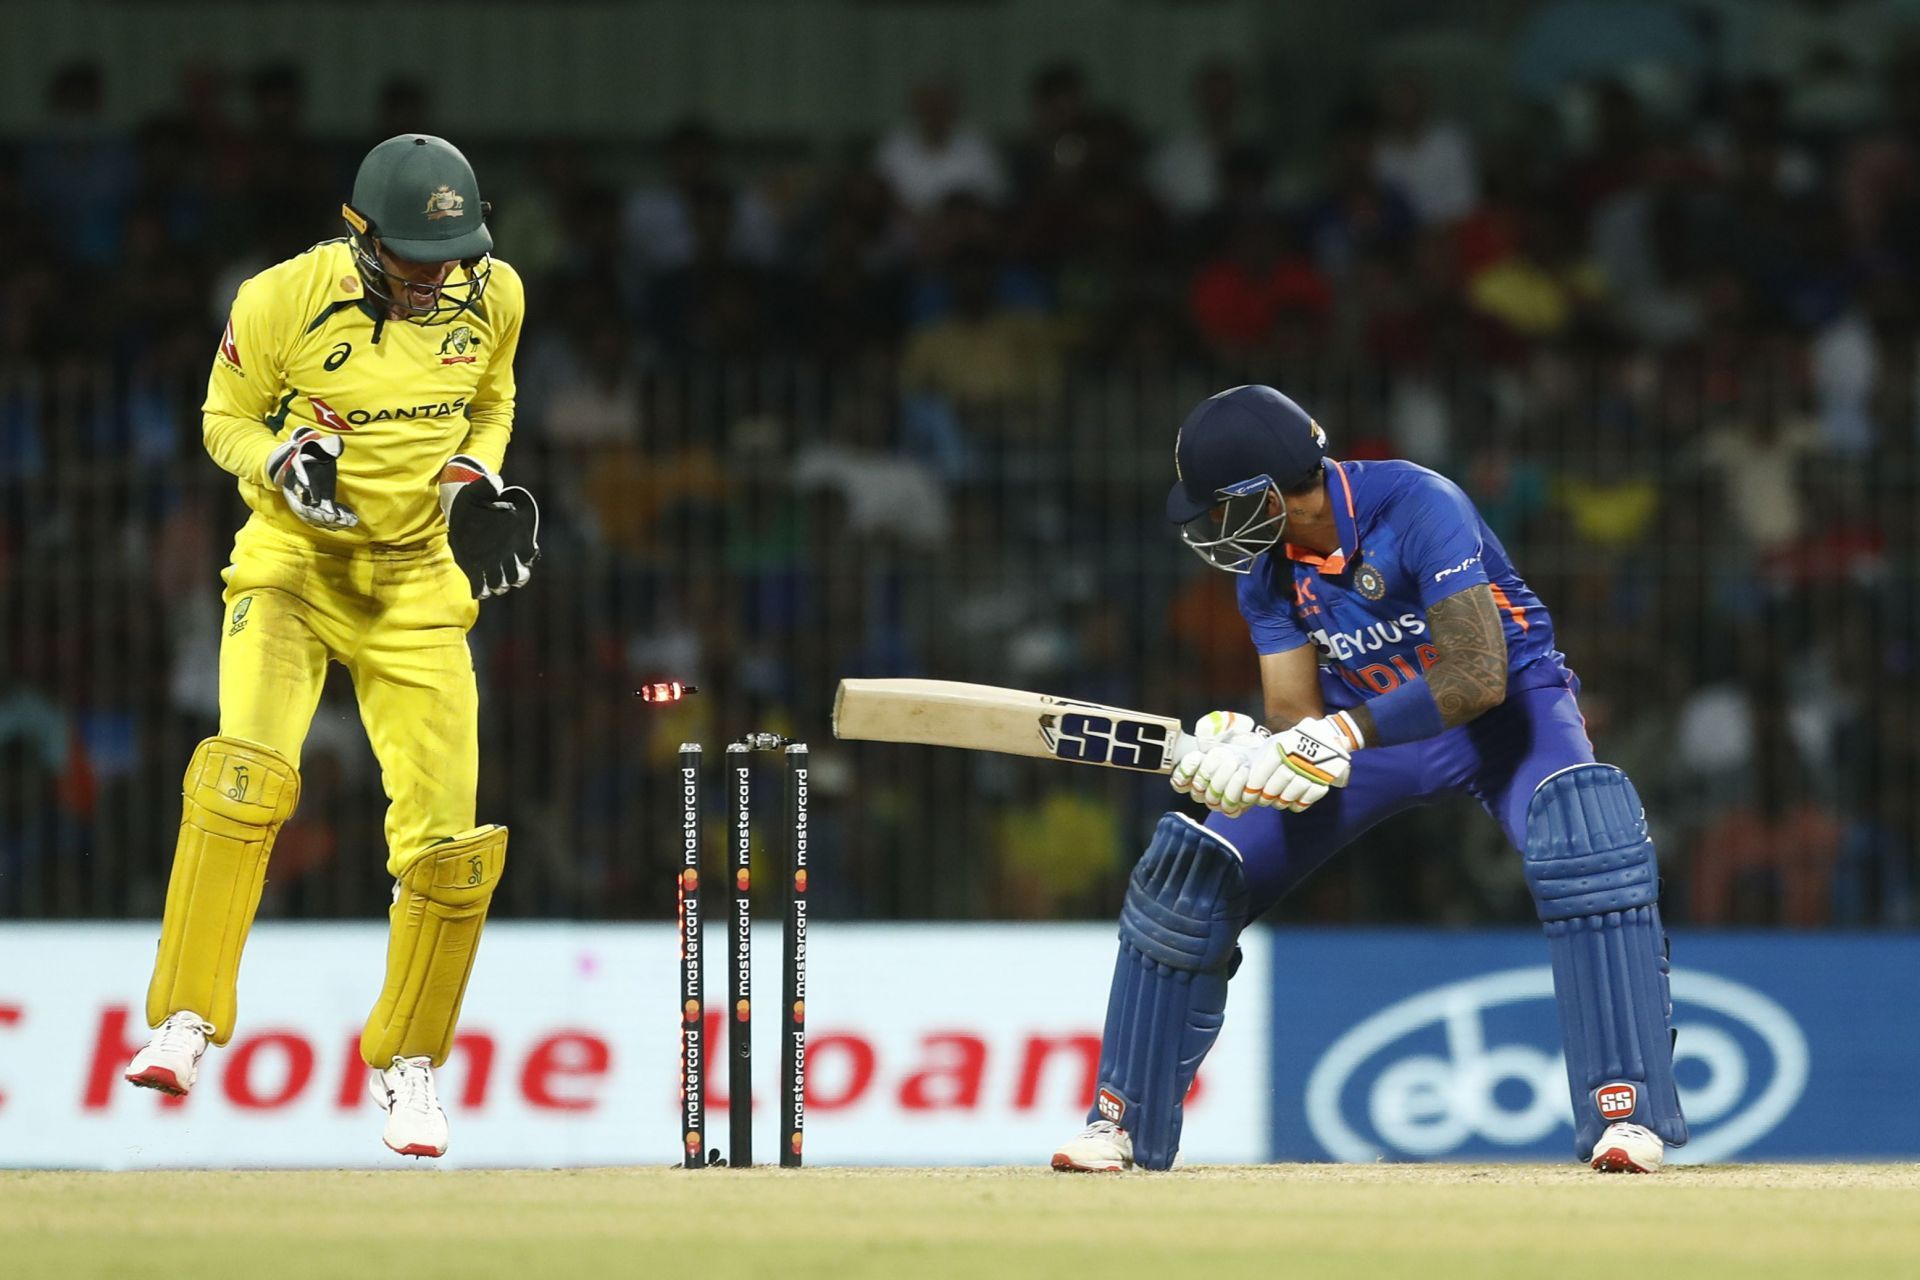 Suryakumar Yadav has an underwhelming average of 24.33 in 26 ODIs.